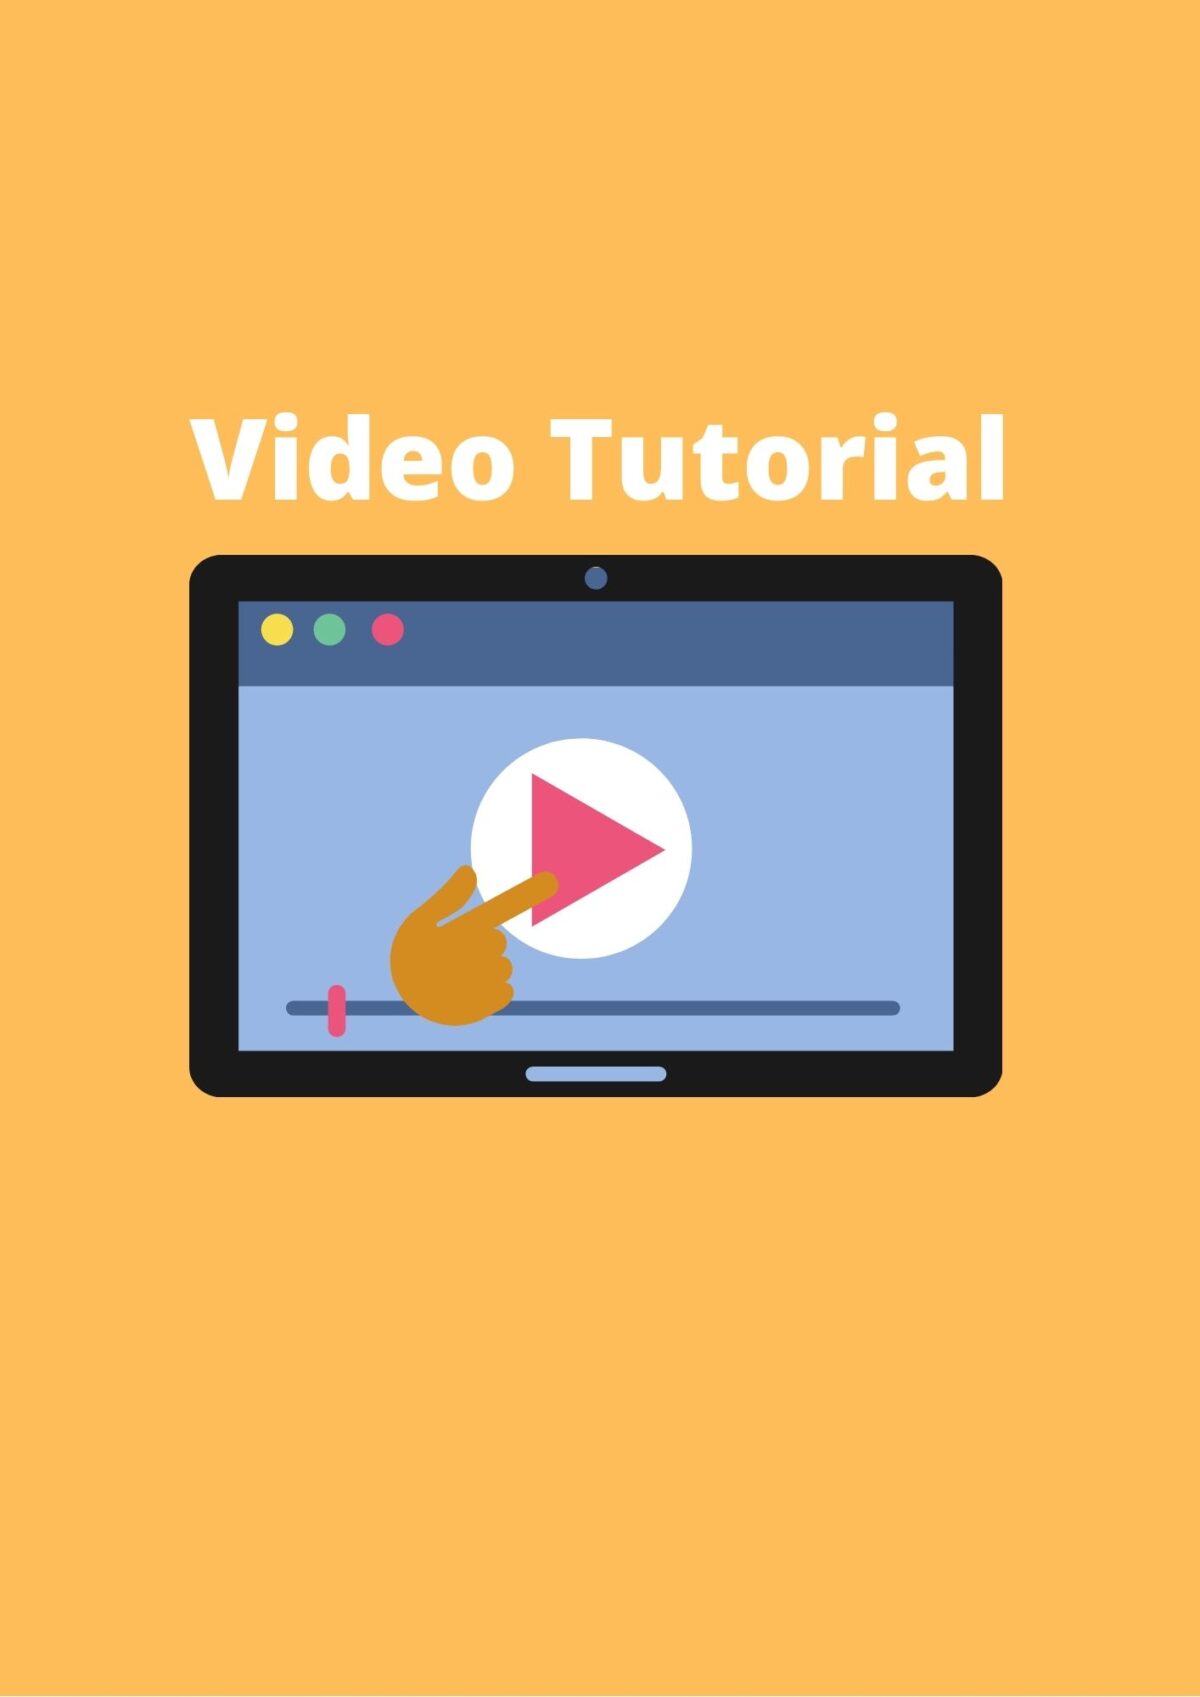 Video tutorial